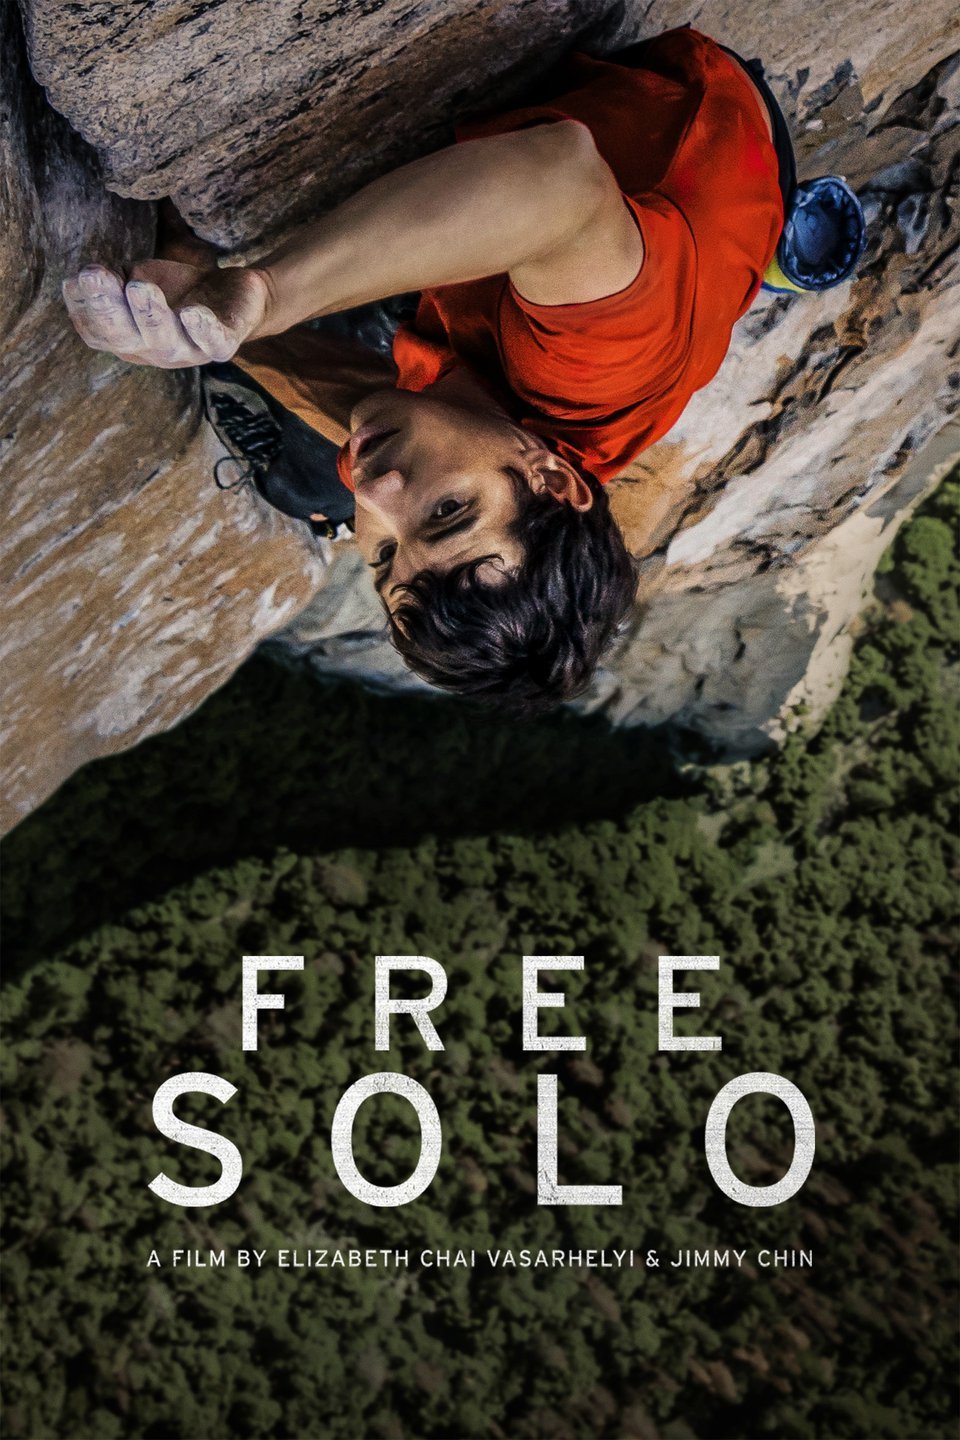 Free Solo (2018) ปีนท้าตาย